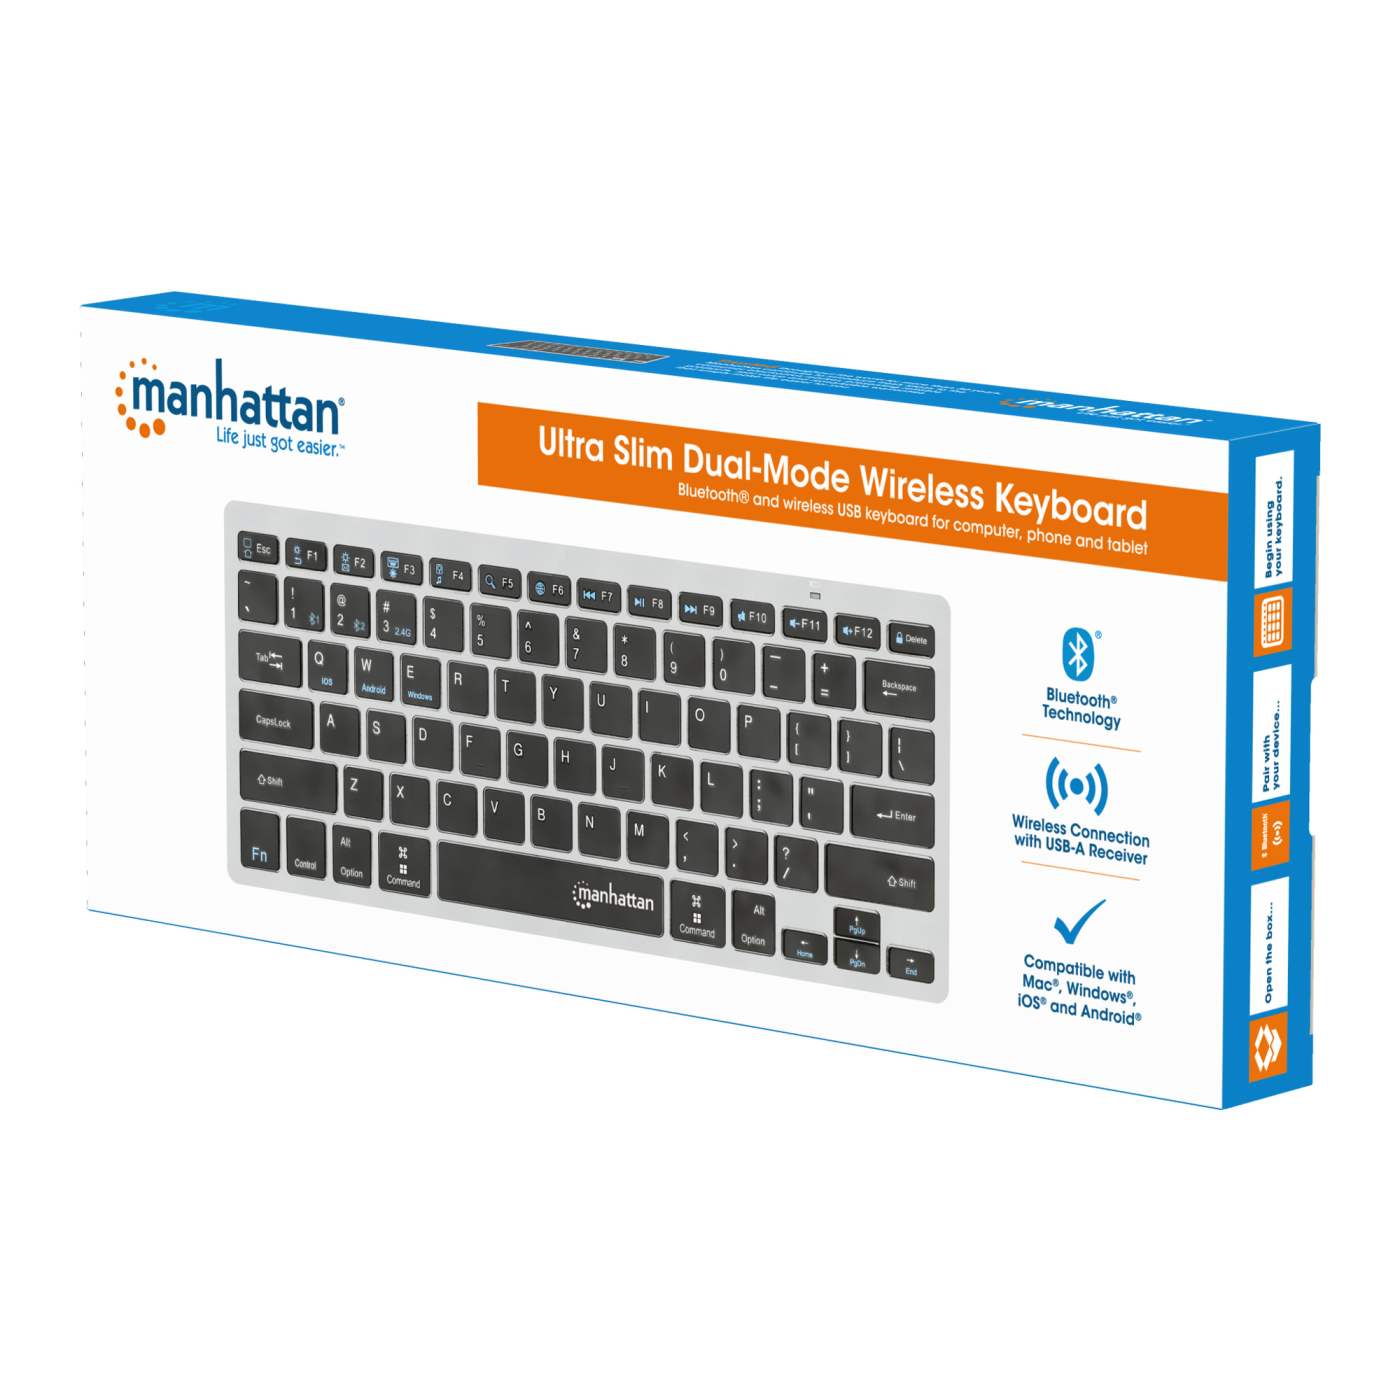 Ultra Slim Dual-Mode Wireless Keyboard Packaging Image 2